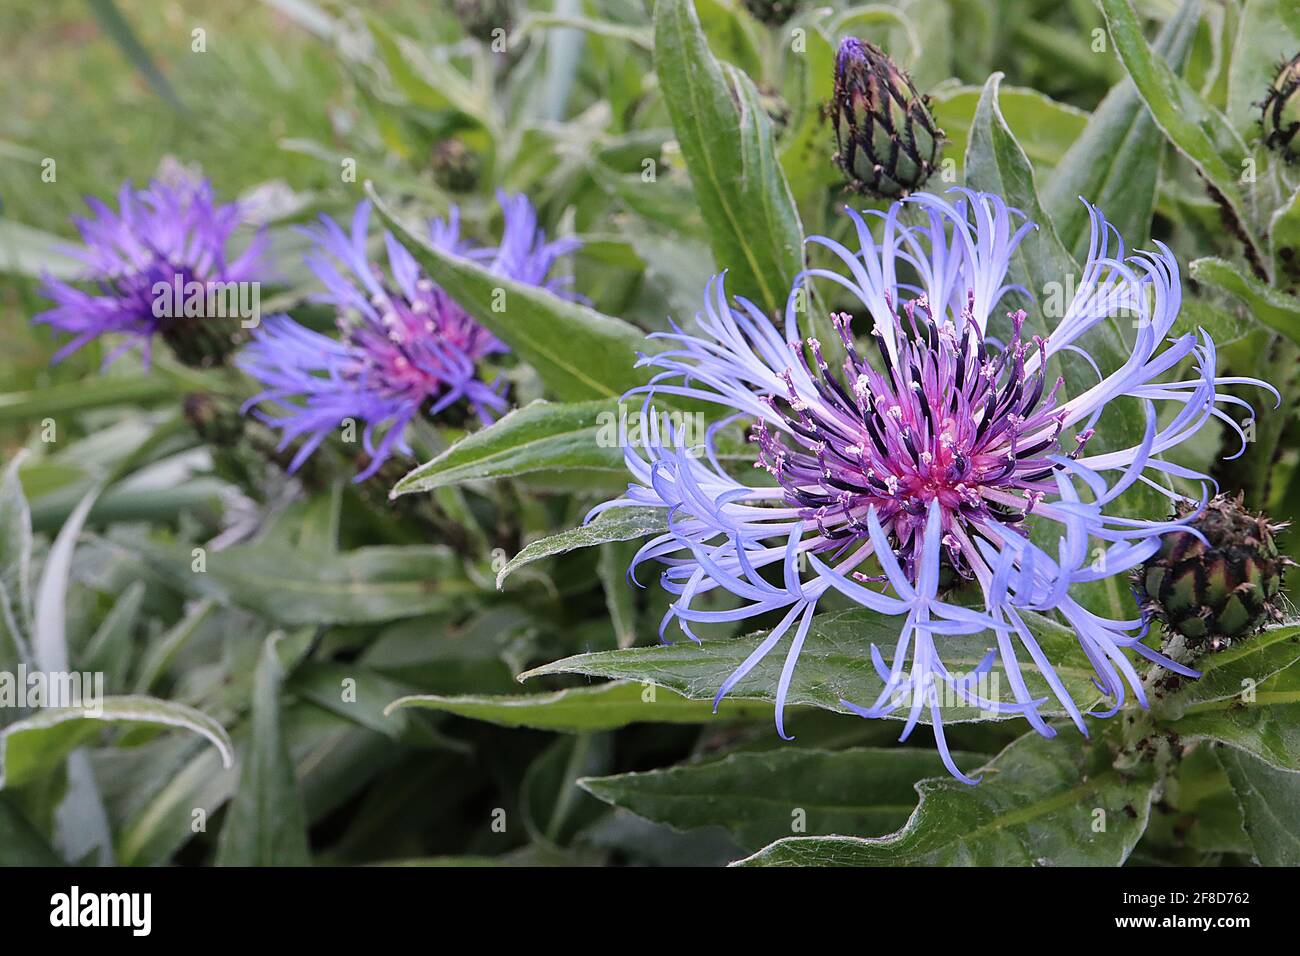 Centaurea montana ‘Grandiflora’ perennial cornflower Grandiflora – fringed radial violet blue flowers and lance-shaped leaves,  April, England, UK Stock Photo